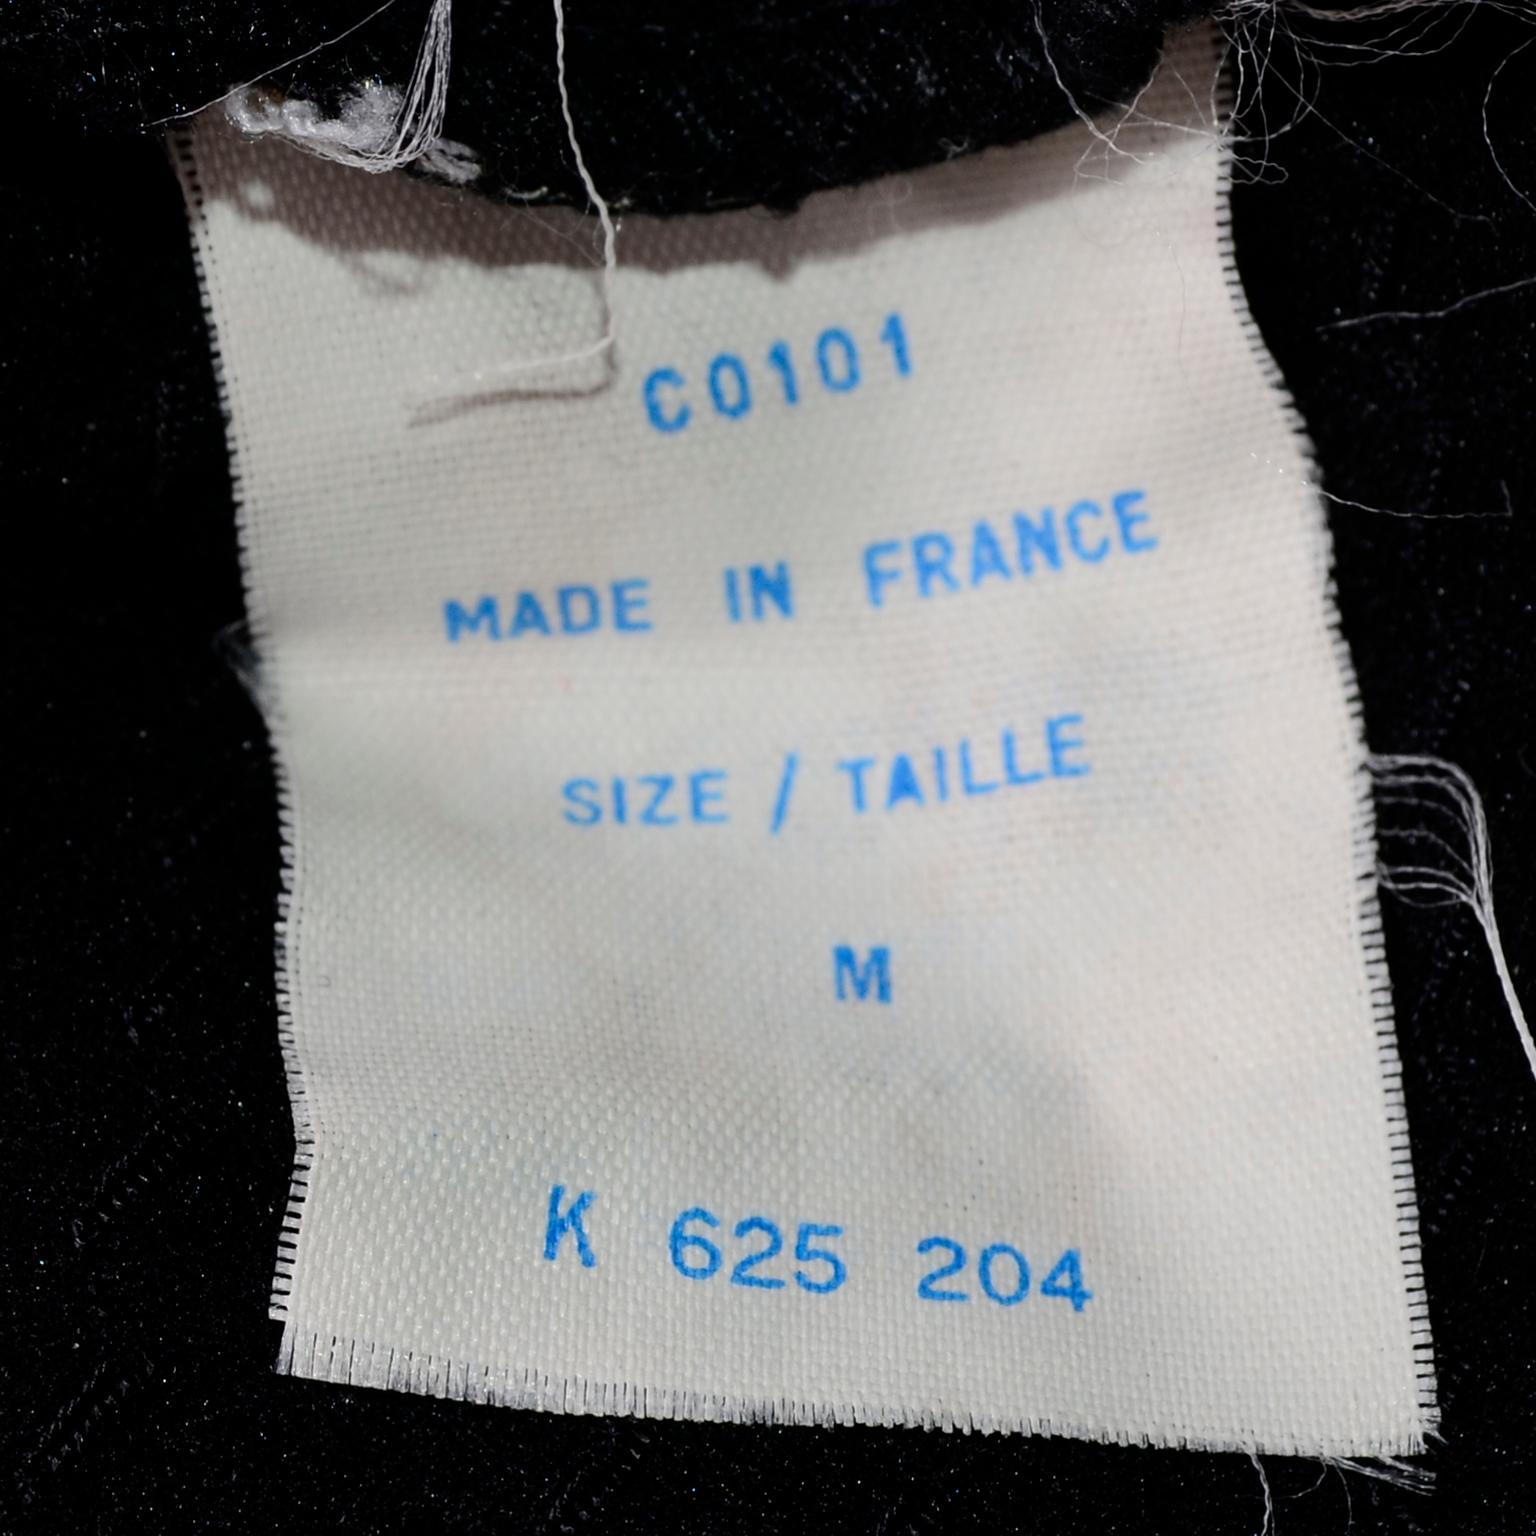 1988 Patrick Kelly Paris Vintage Crinkle Ruched Black Bodycon Dress 7